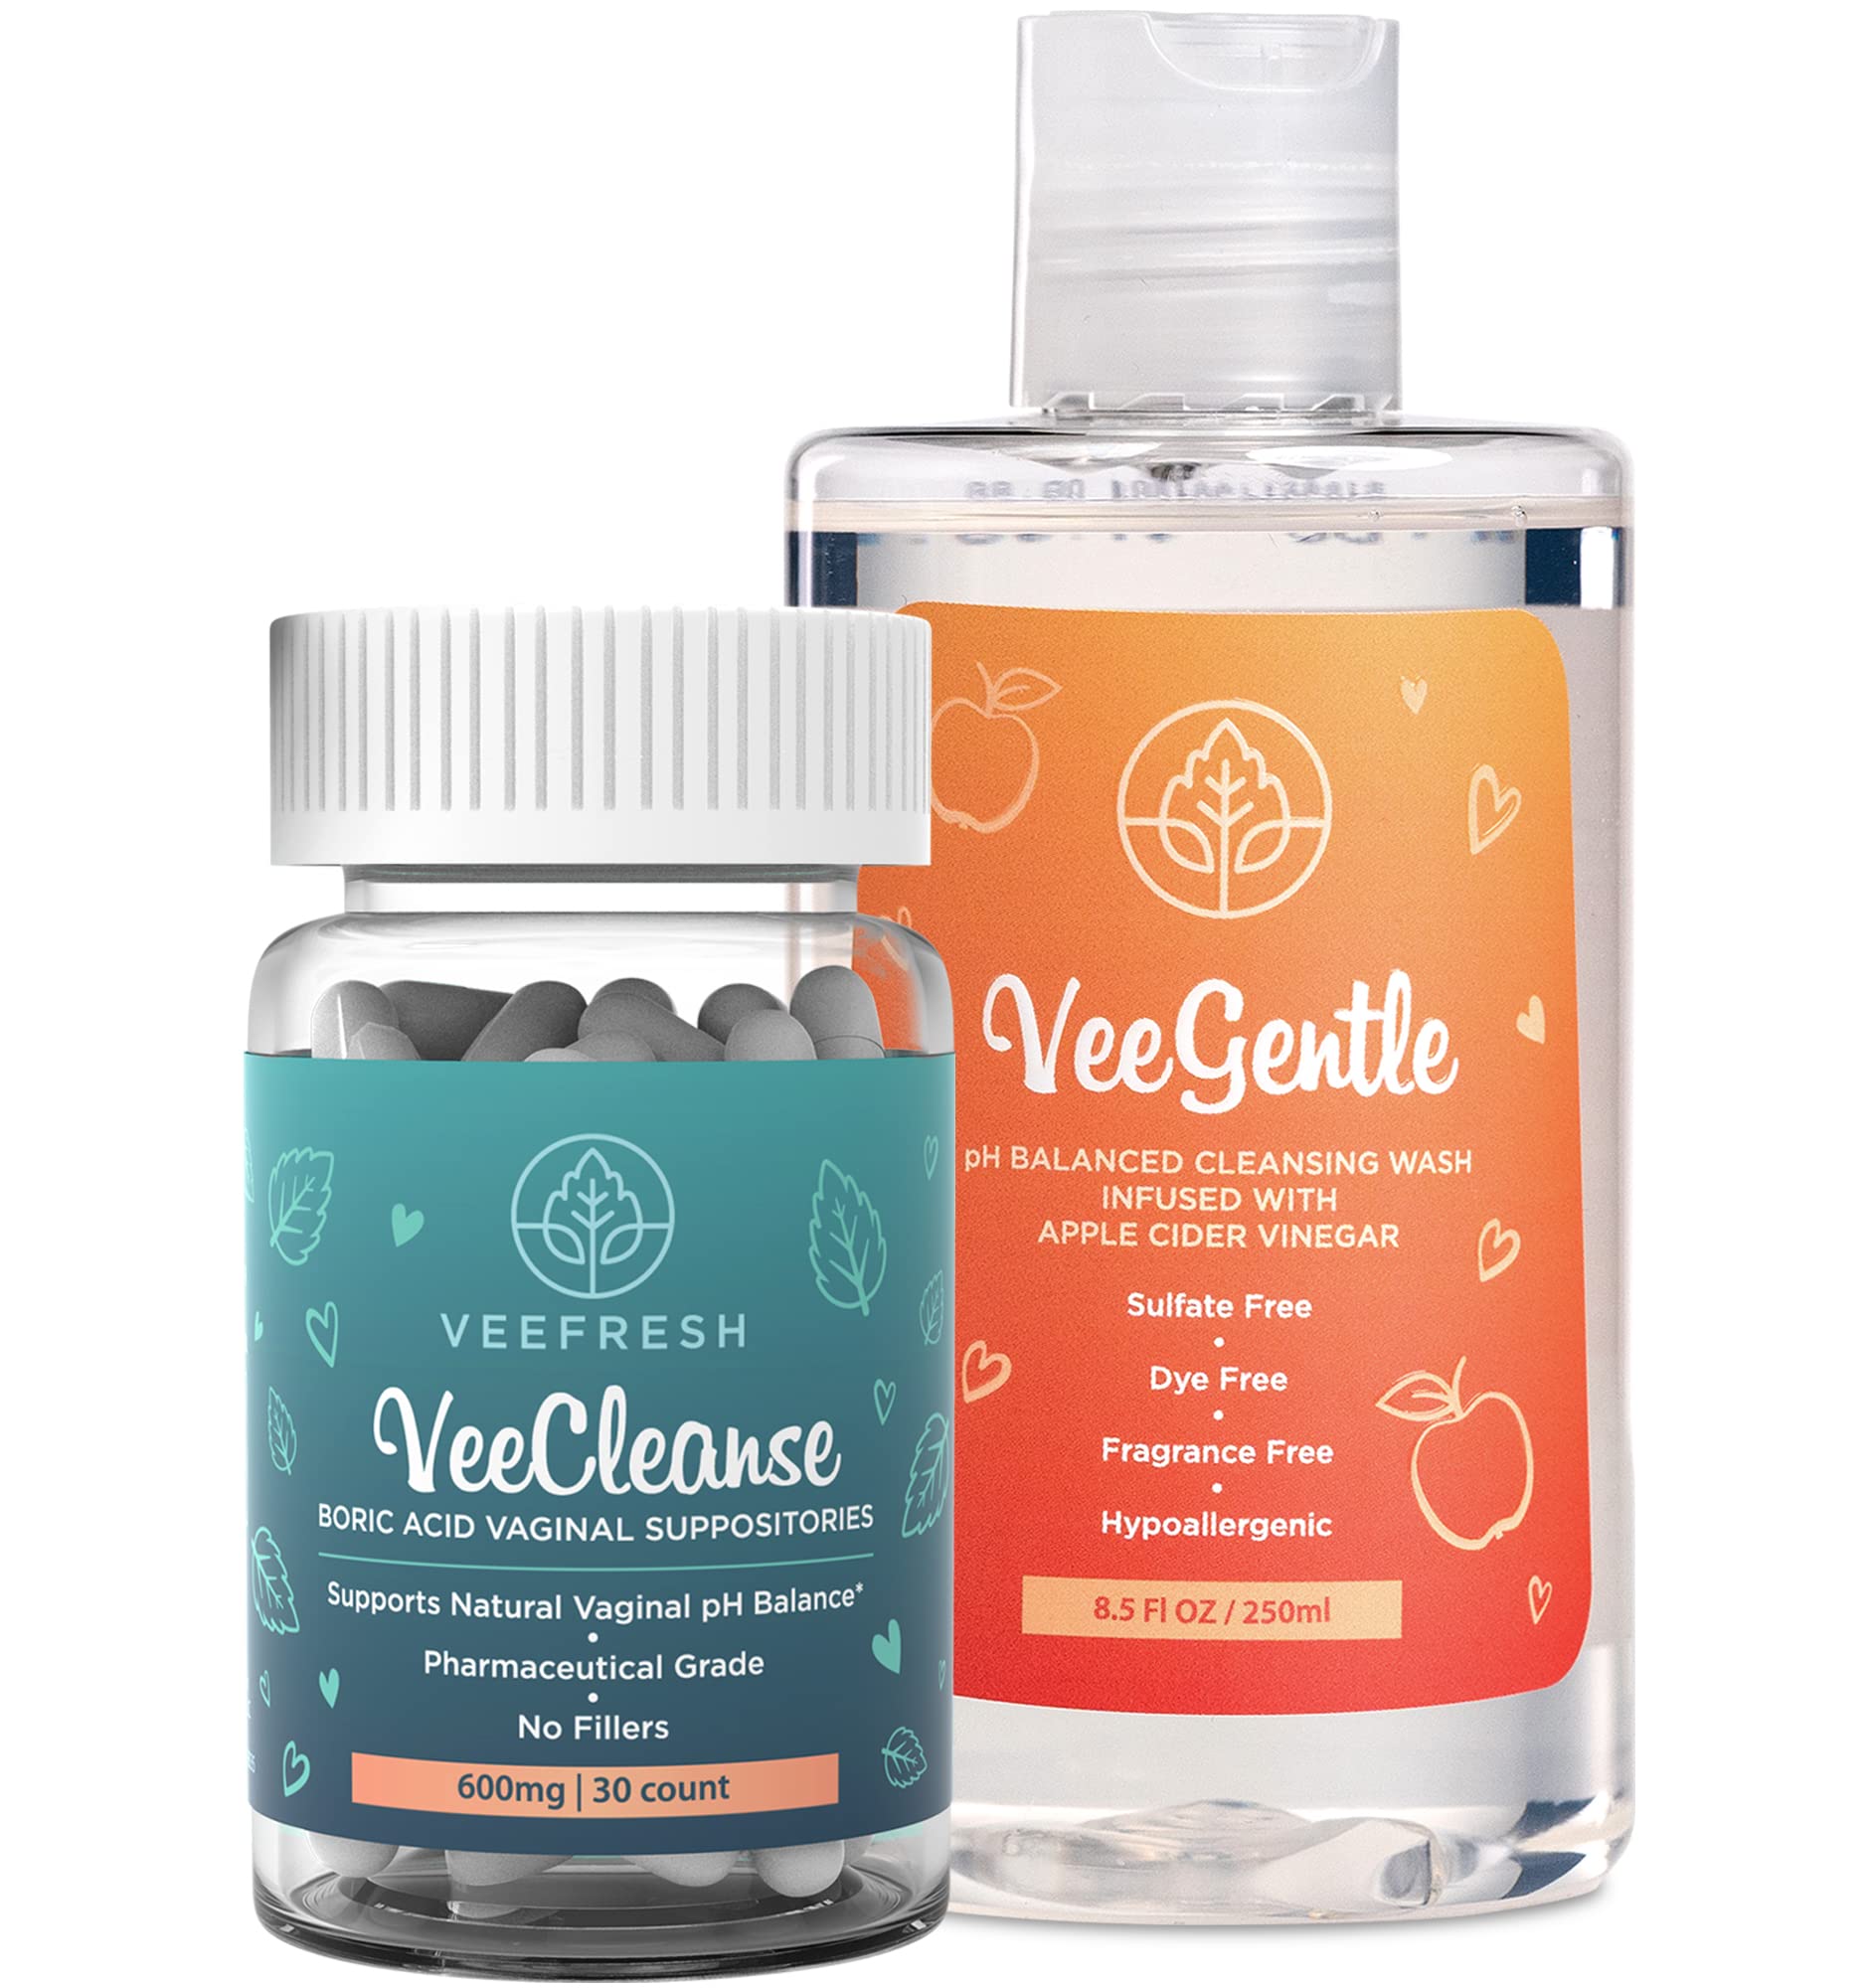 VeeFresh - VeePower Vaginal Health Bundle - Control and Prevent Vaginal Odor - Includes VeeGentle Feminine Wash for Vaginal pH Balance, VeeCleanse Boric Acid Vaginal Suppository